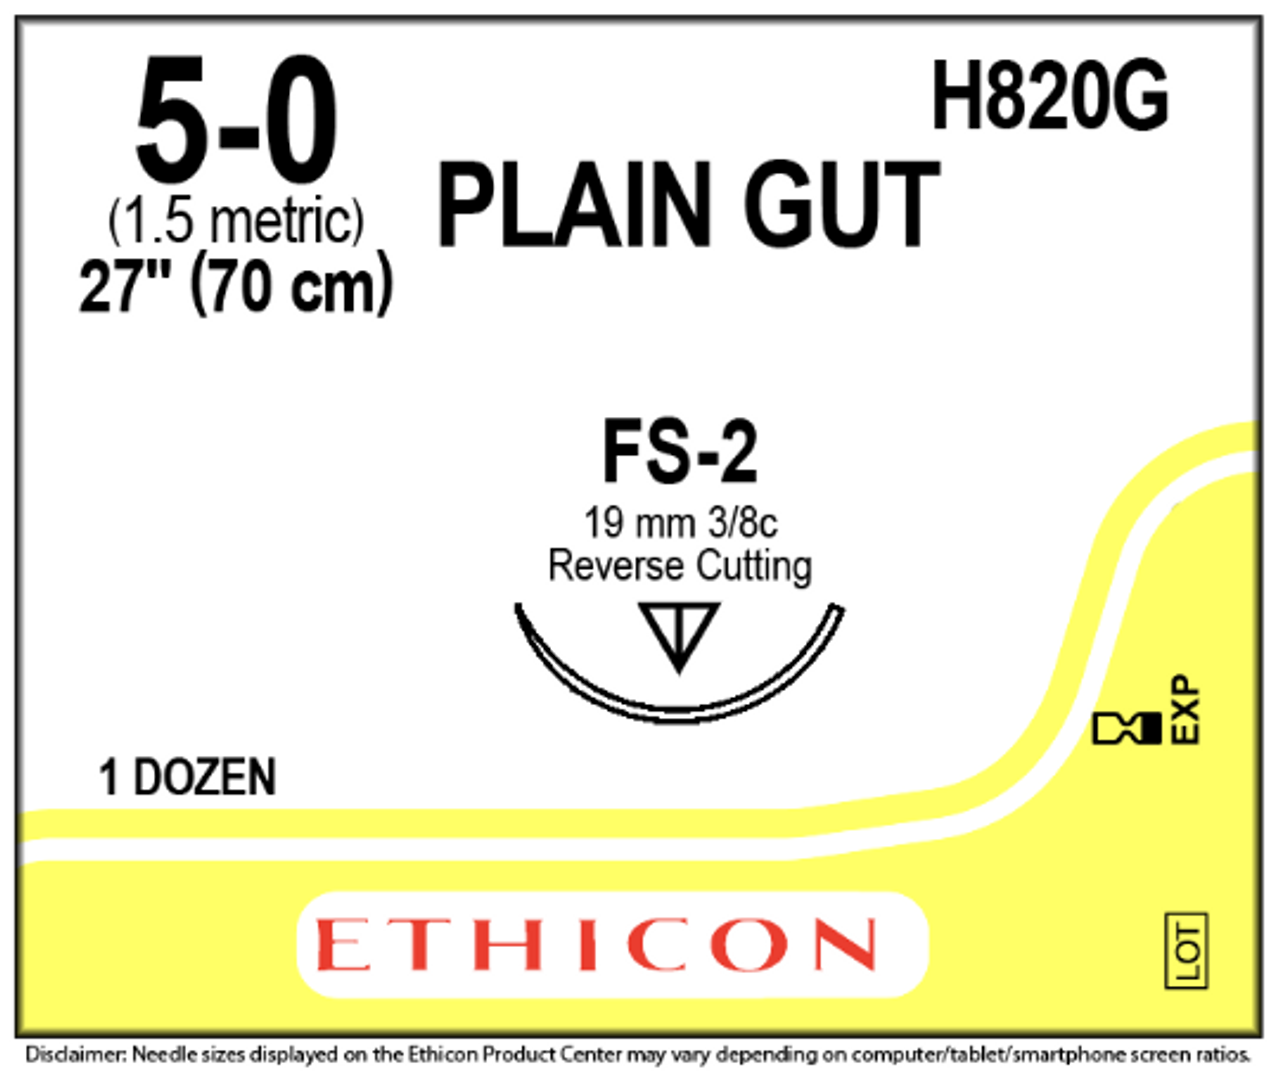 H820G SUTURE GUT PLAIN 5-0 27in FS-2 BX/12